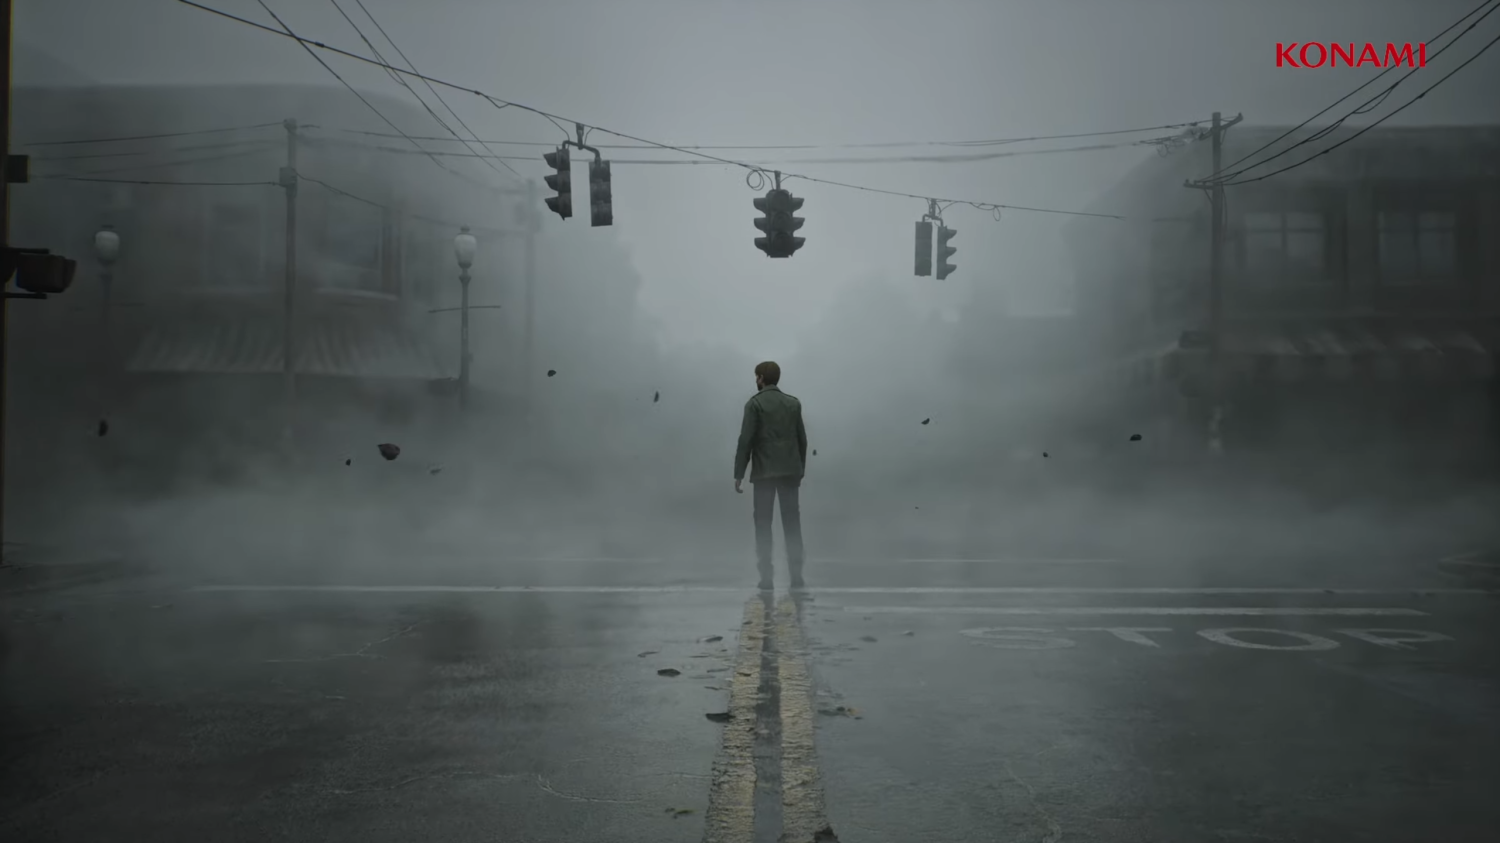 Silent Hill 2 Remake Leads Konami's Franchise Revival - CNET